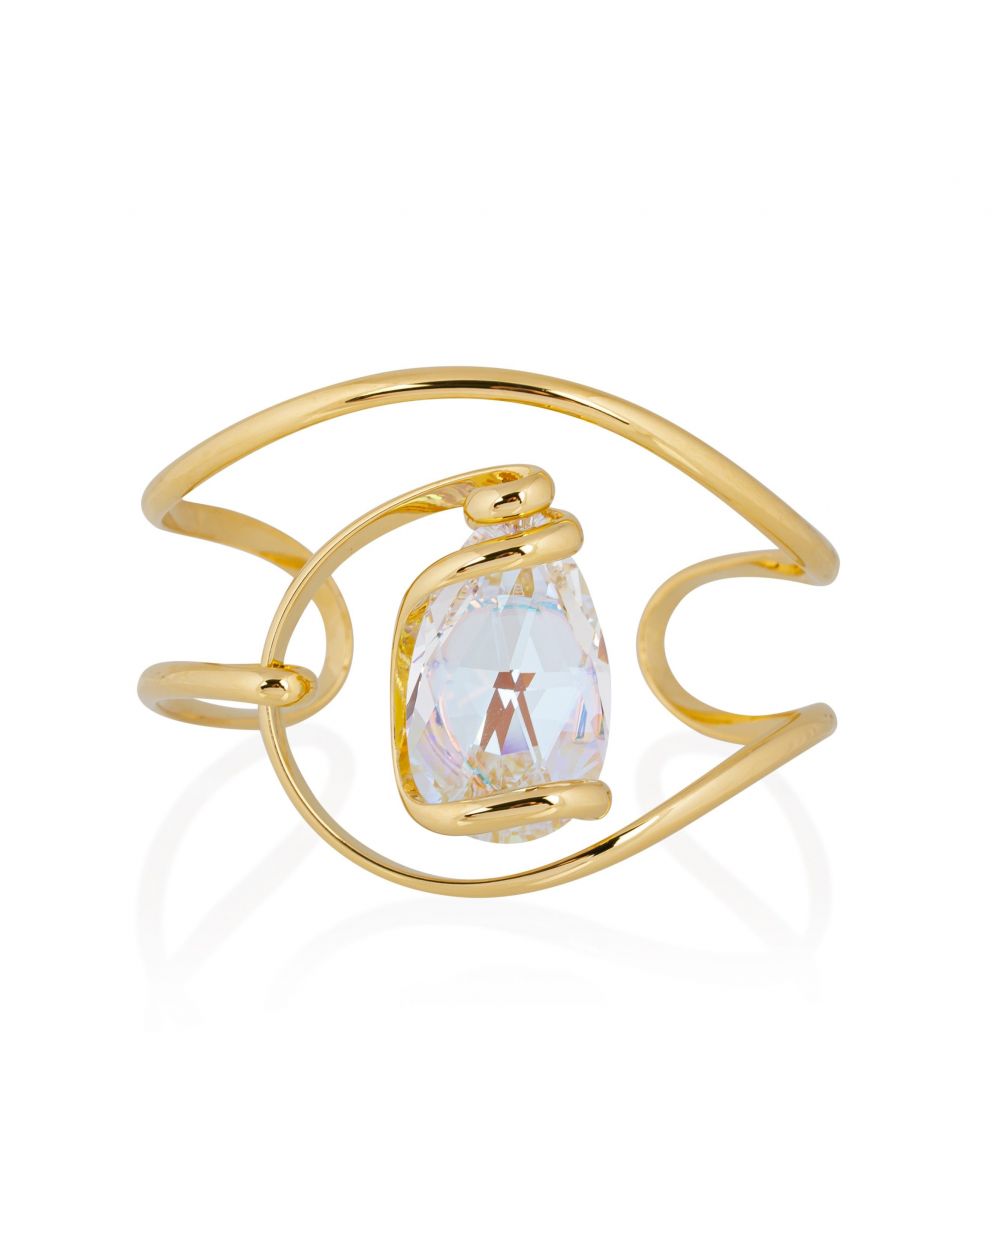 Andrea Marazzini bijoux - Bracelet cristal Swarovski Drop AB BR1